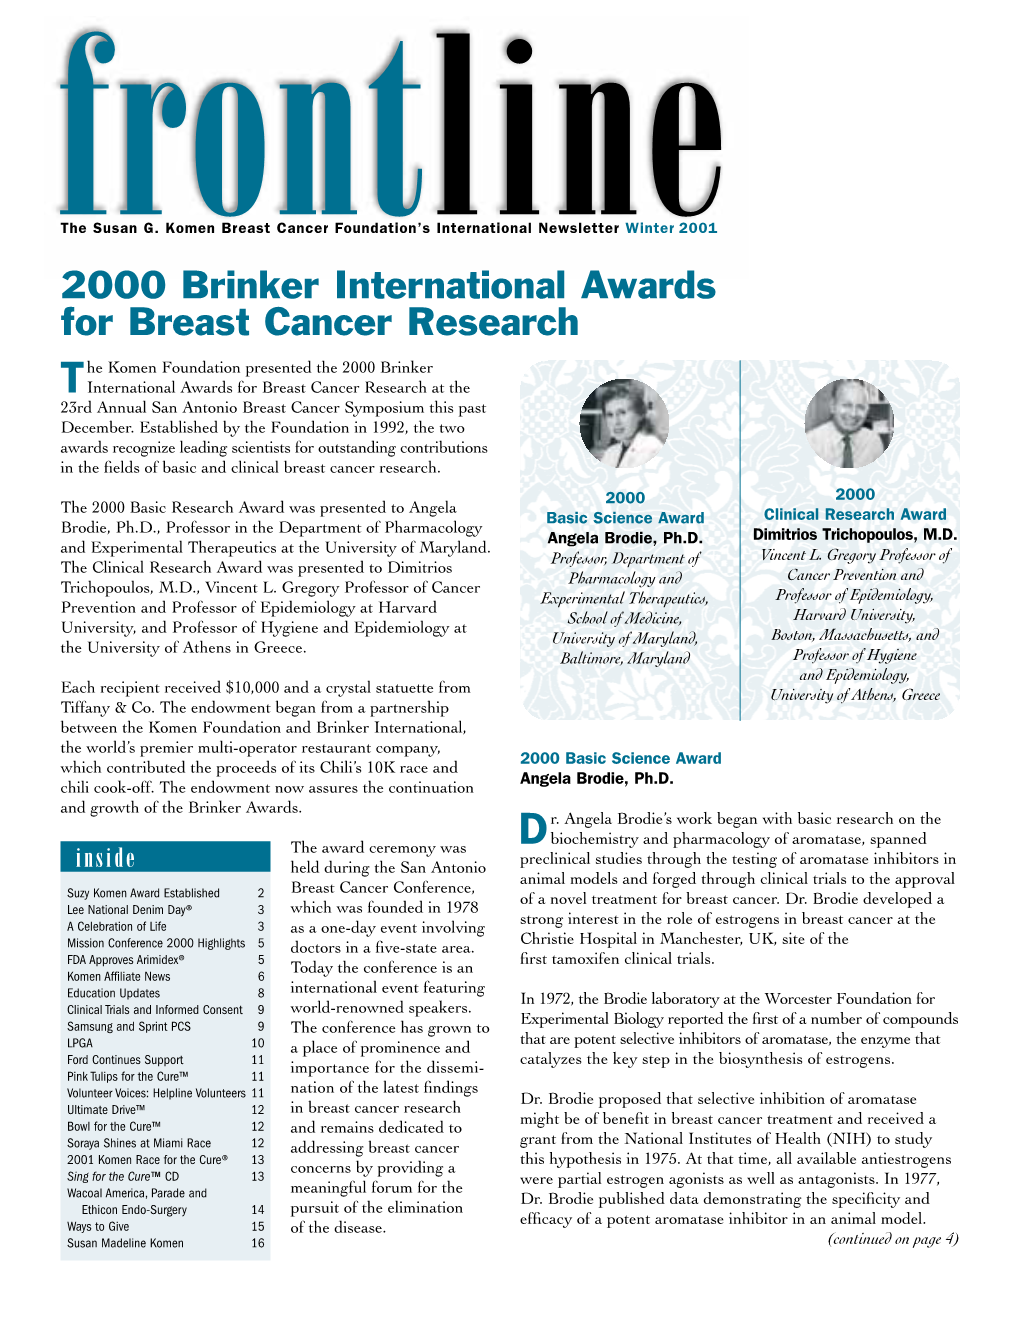 2000 Brinker International Awards for Breast Cancer Research